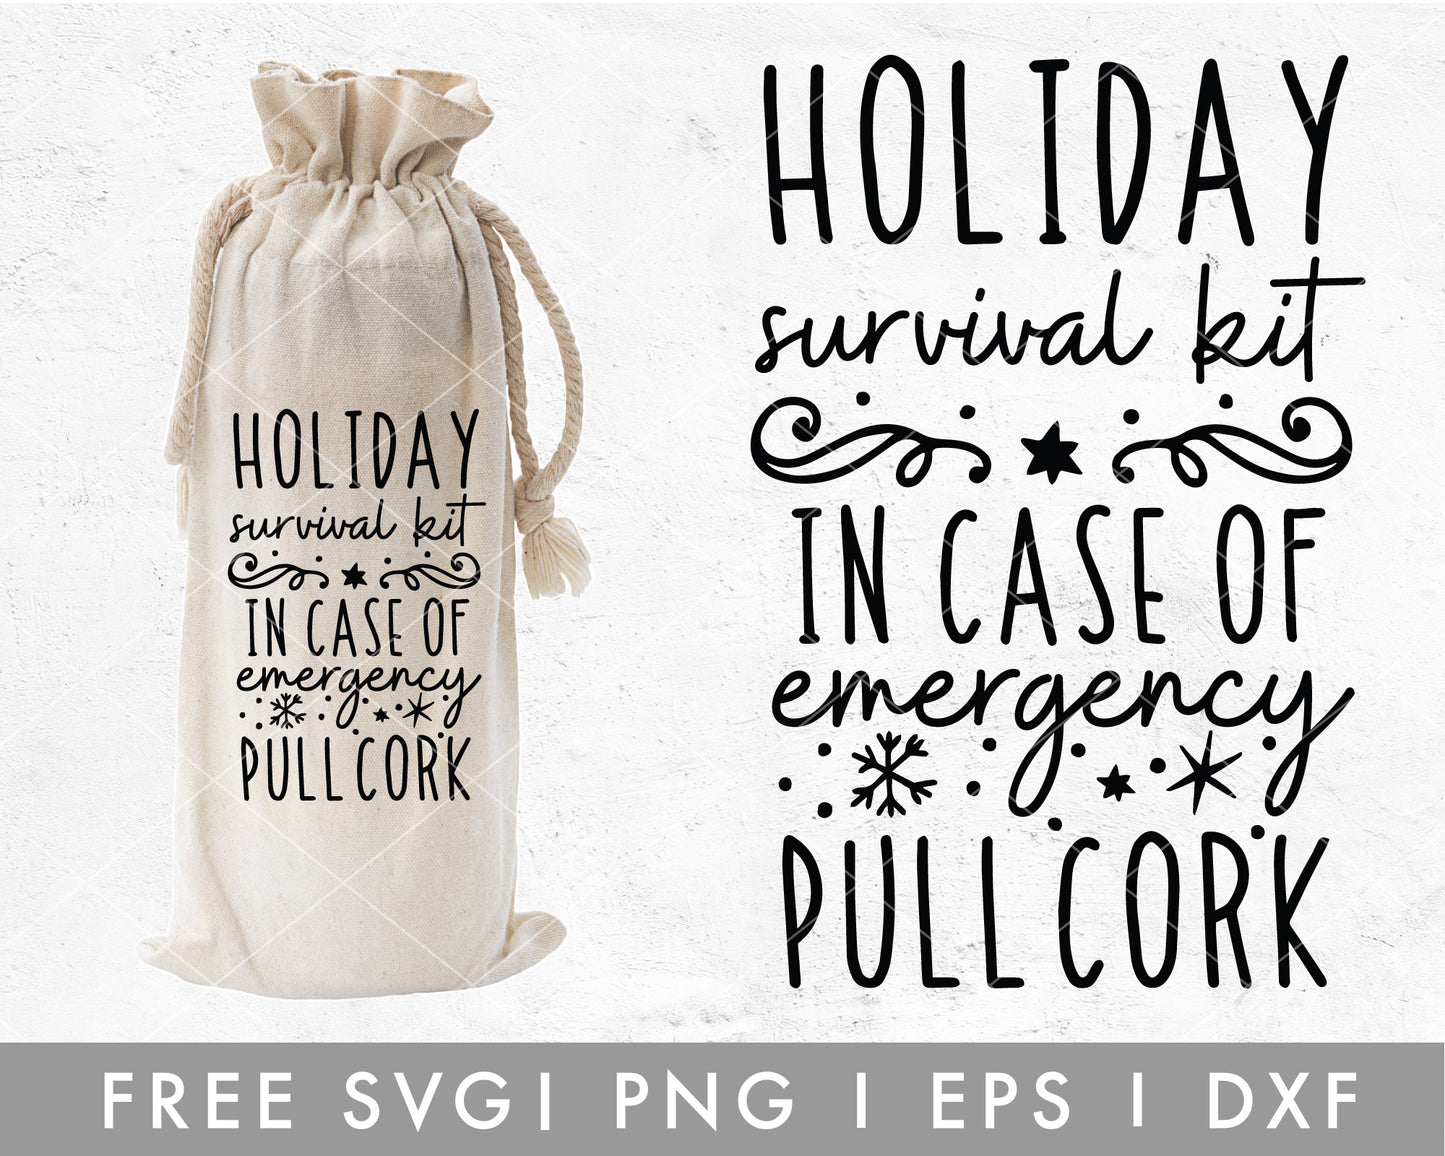 FREE Holiday Survival Kit SVG